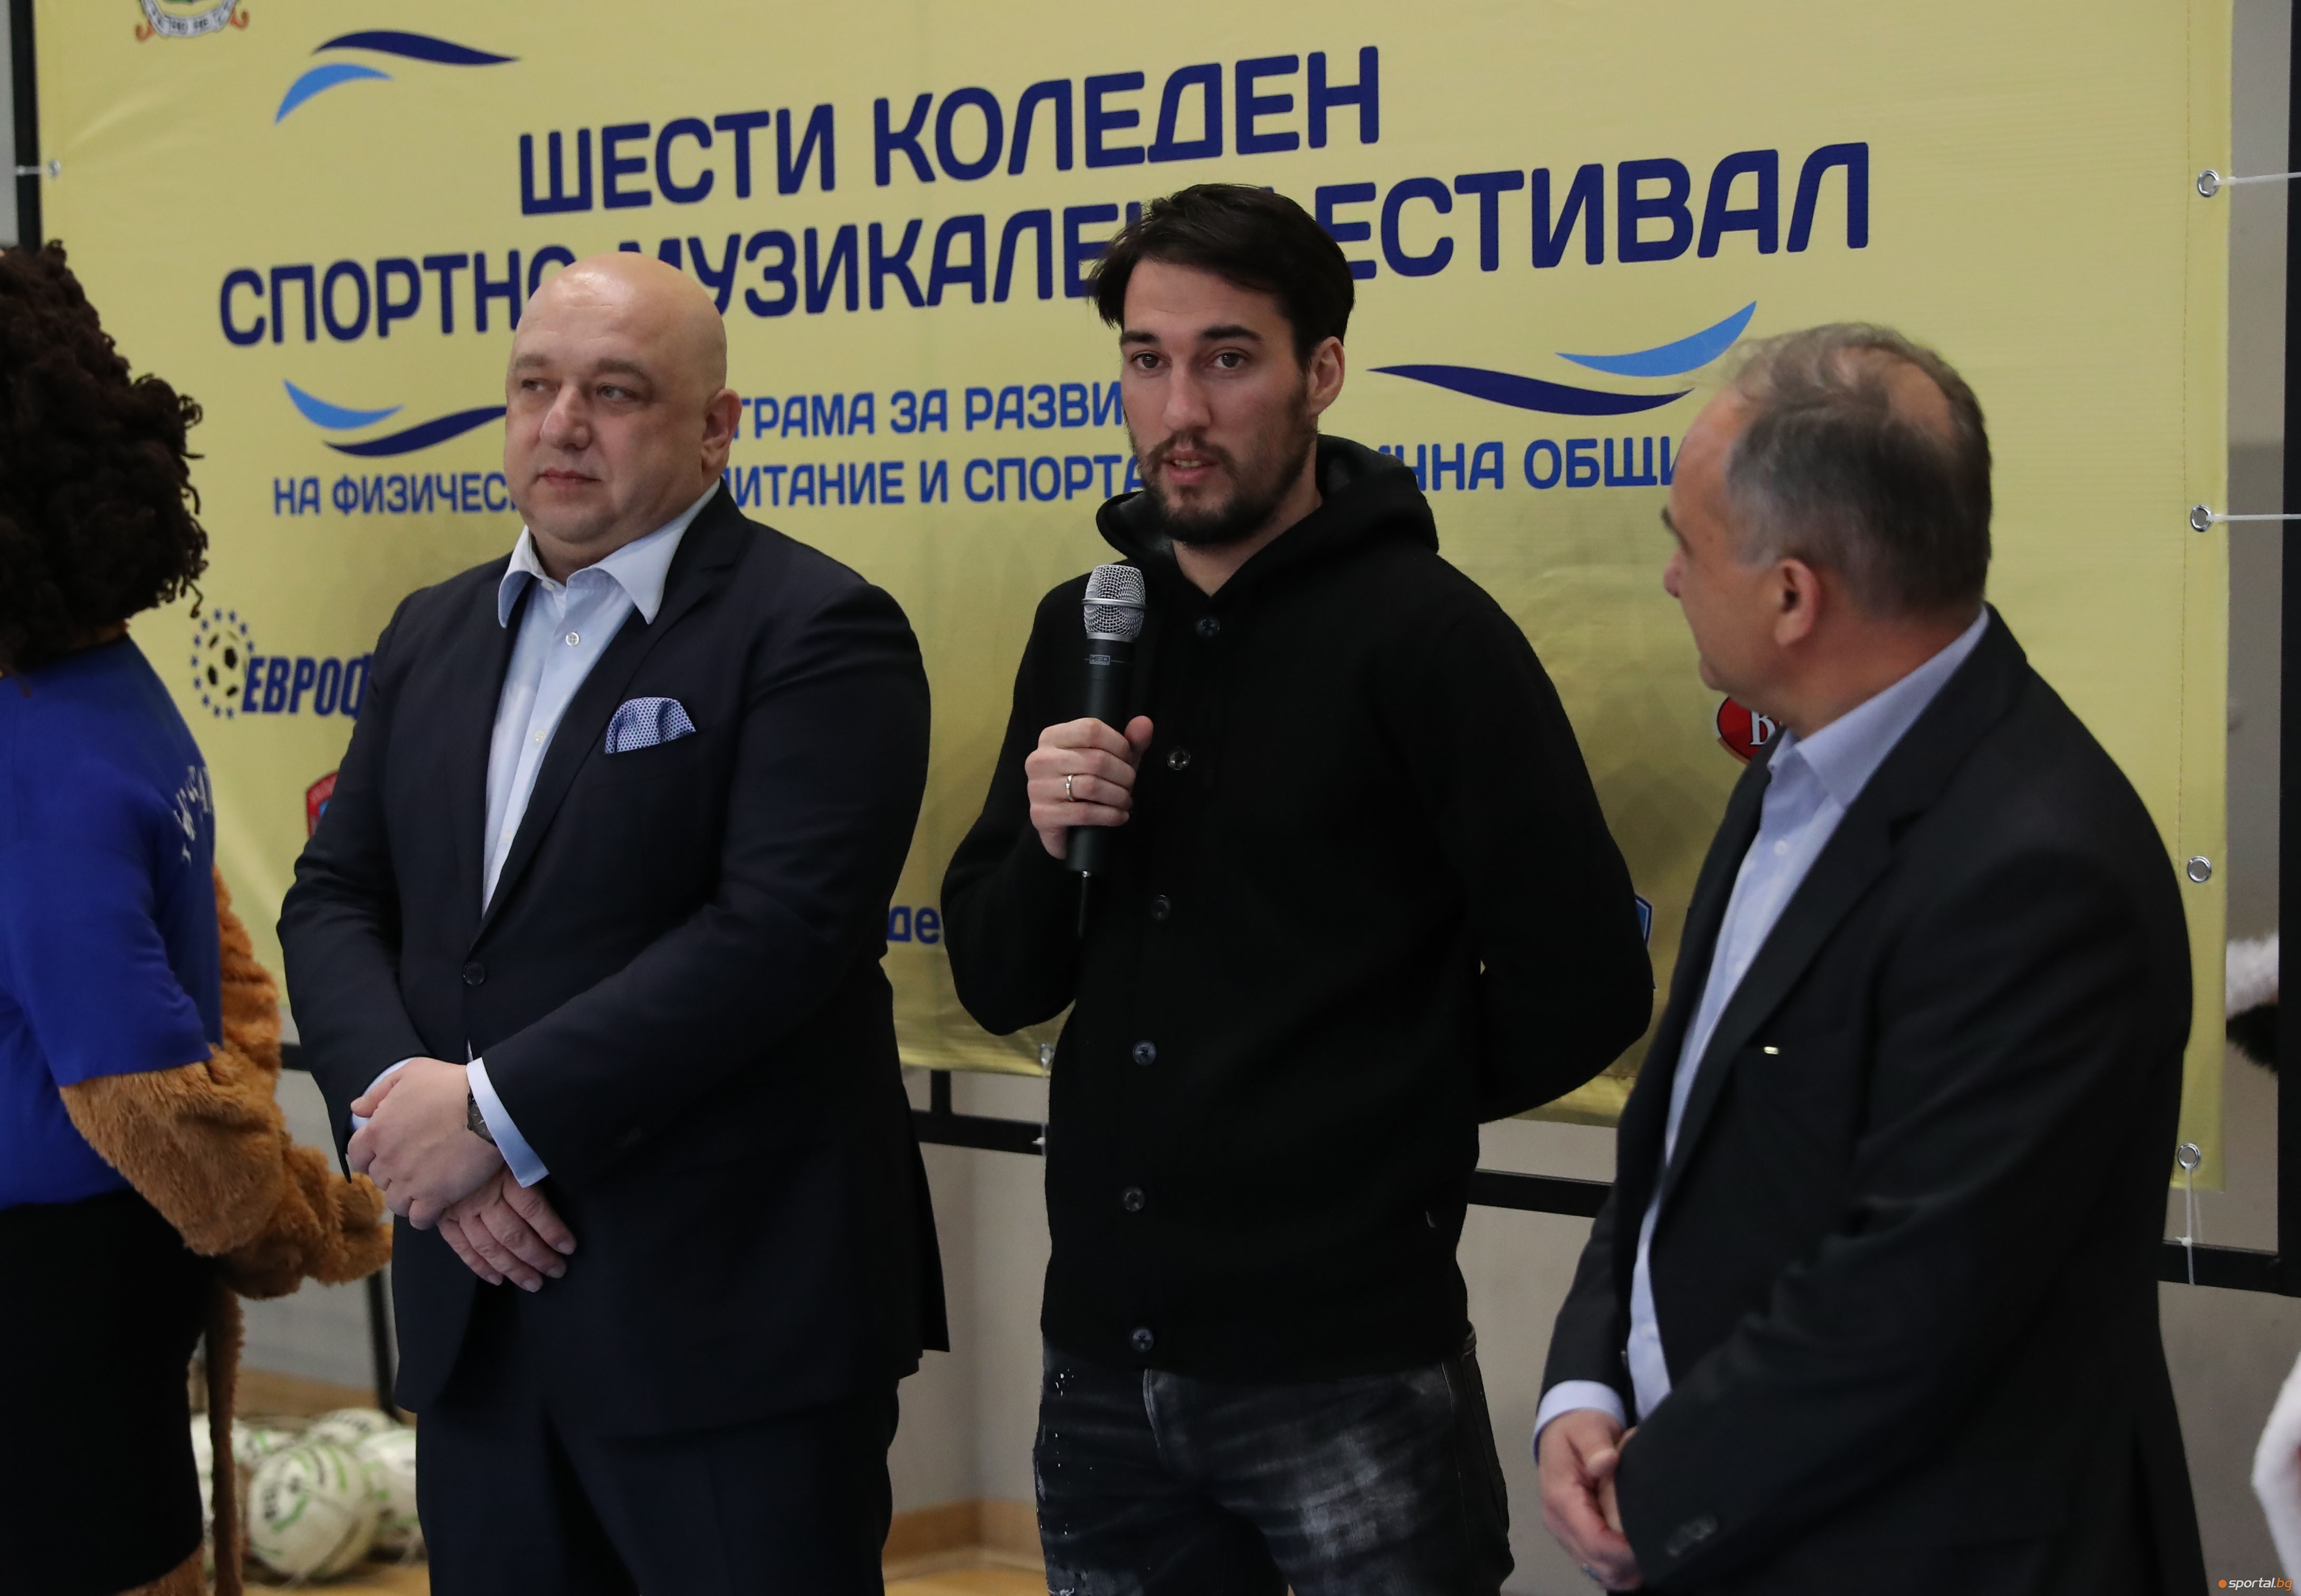 Ивелин Попов бе гост на откриването на деткси коледен спортно-музикален фестивал